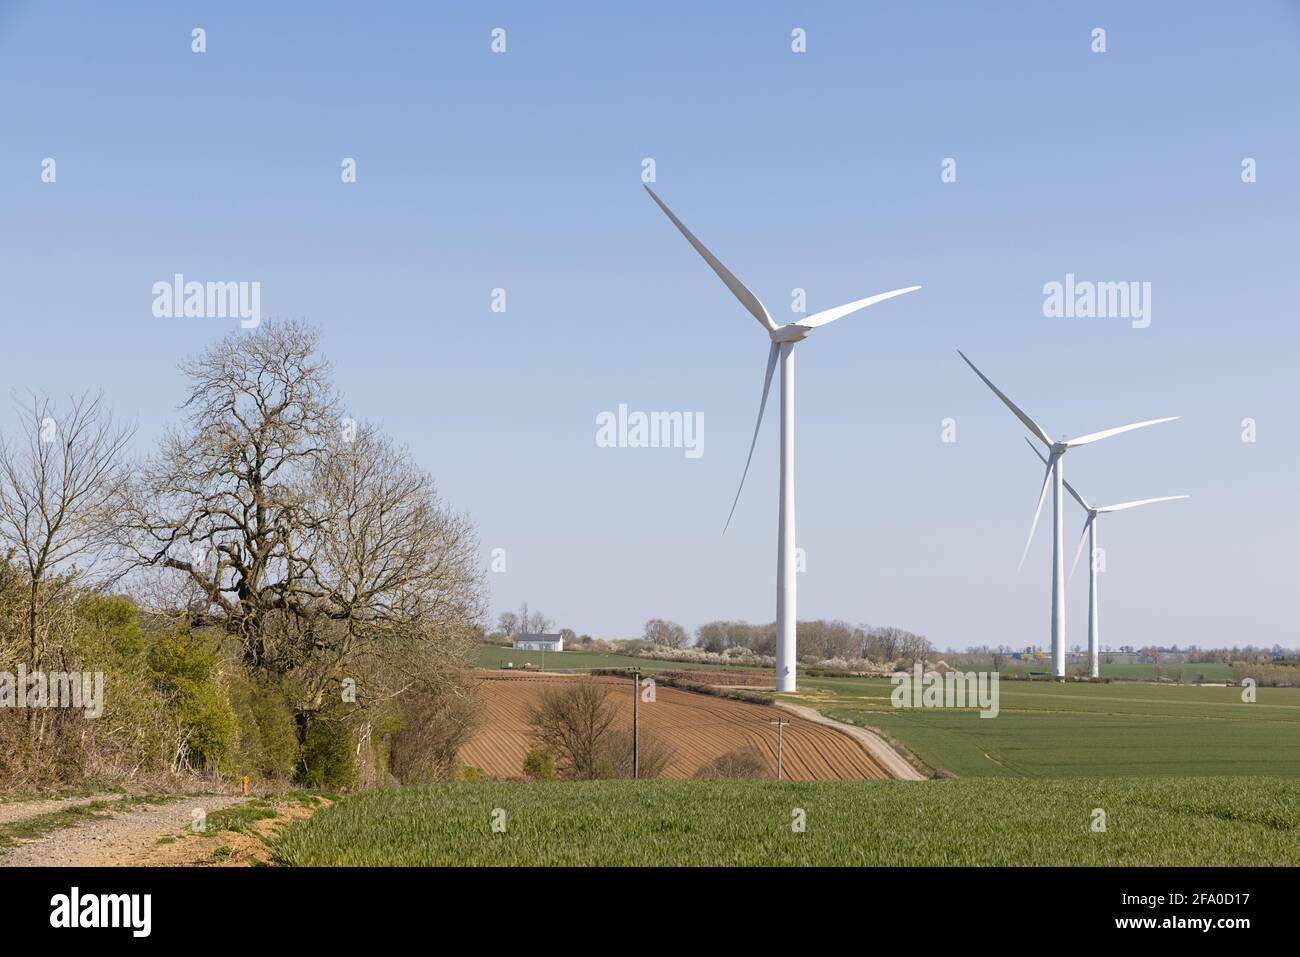 Crick, Northamptonshire, UK - April 19th 2021: Three wind turbines stand in arable farmland beneath a clear blue sky. Stock Photo